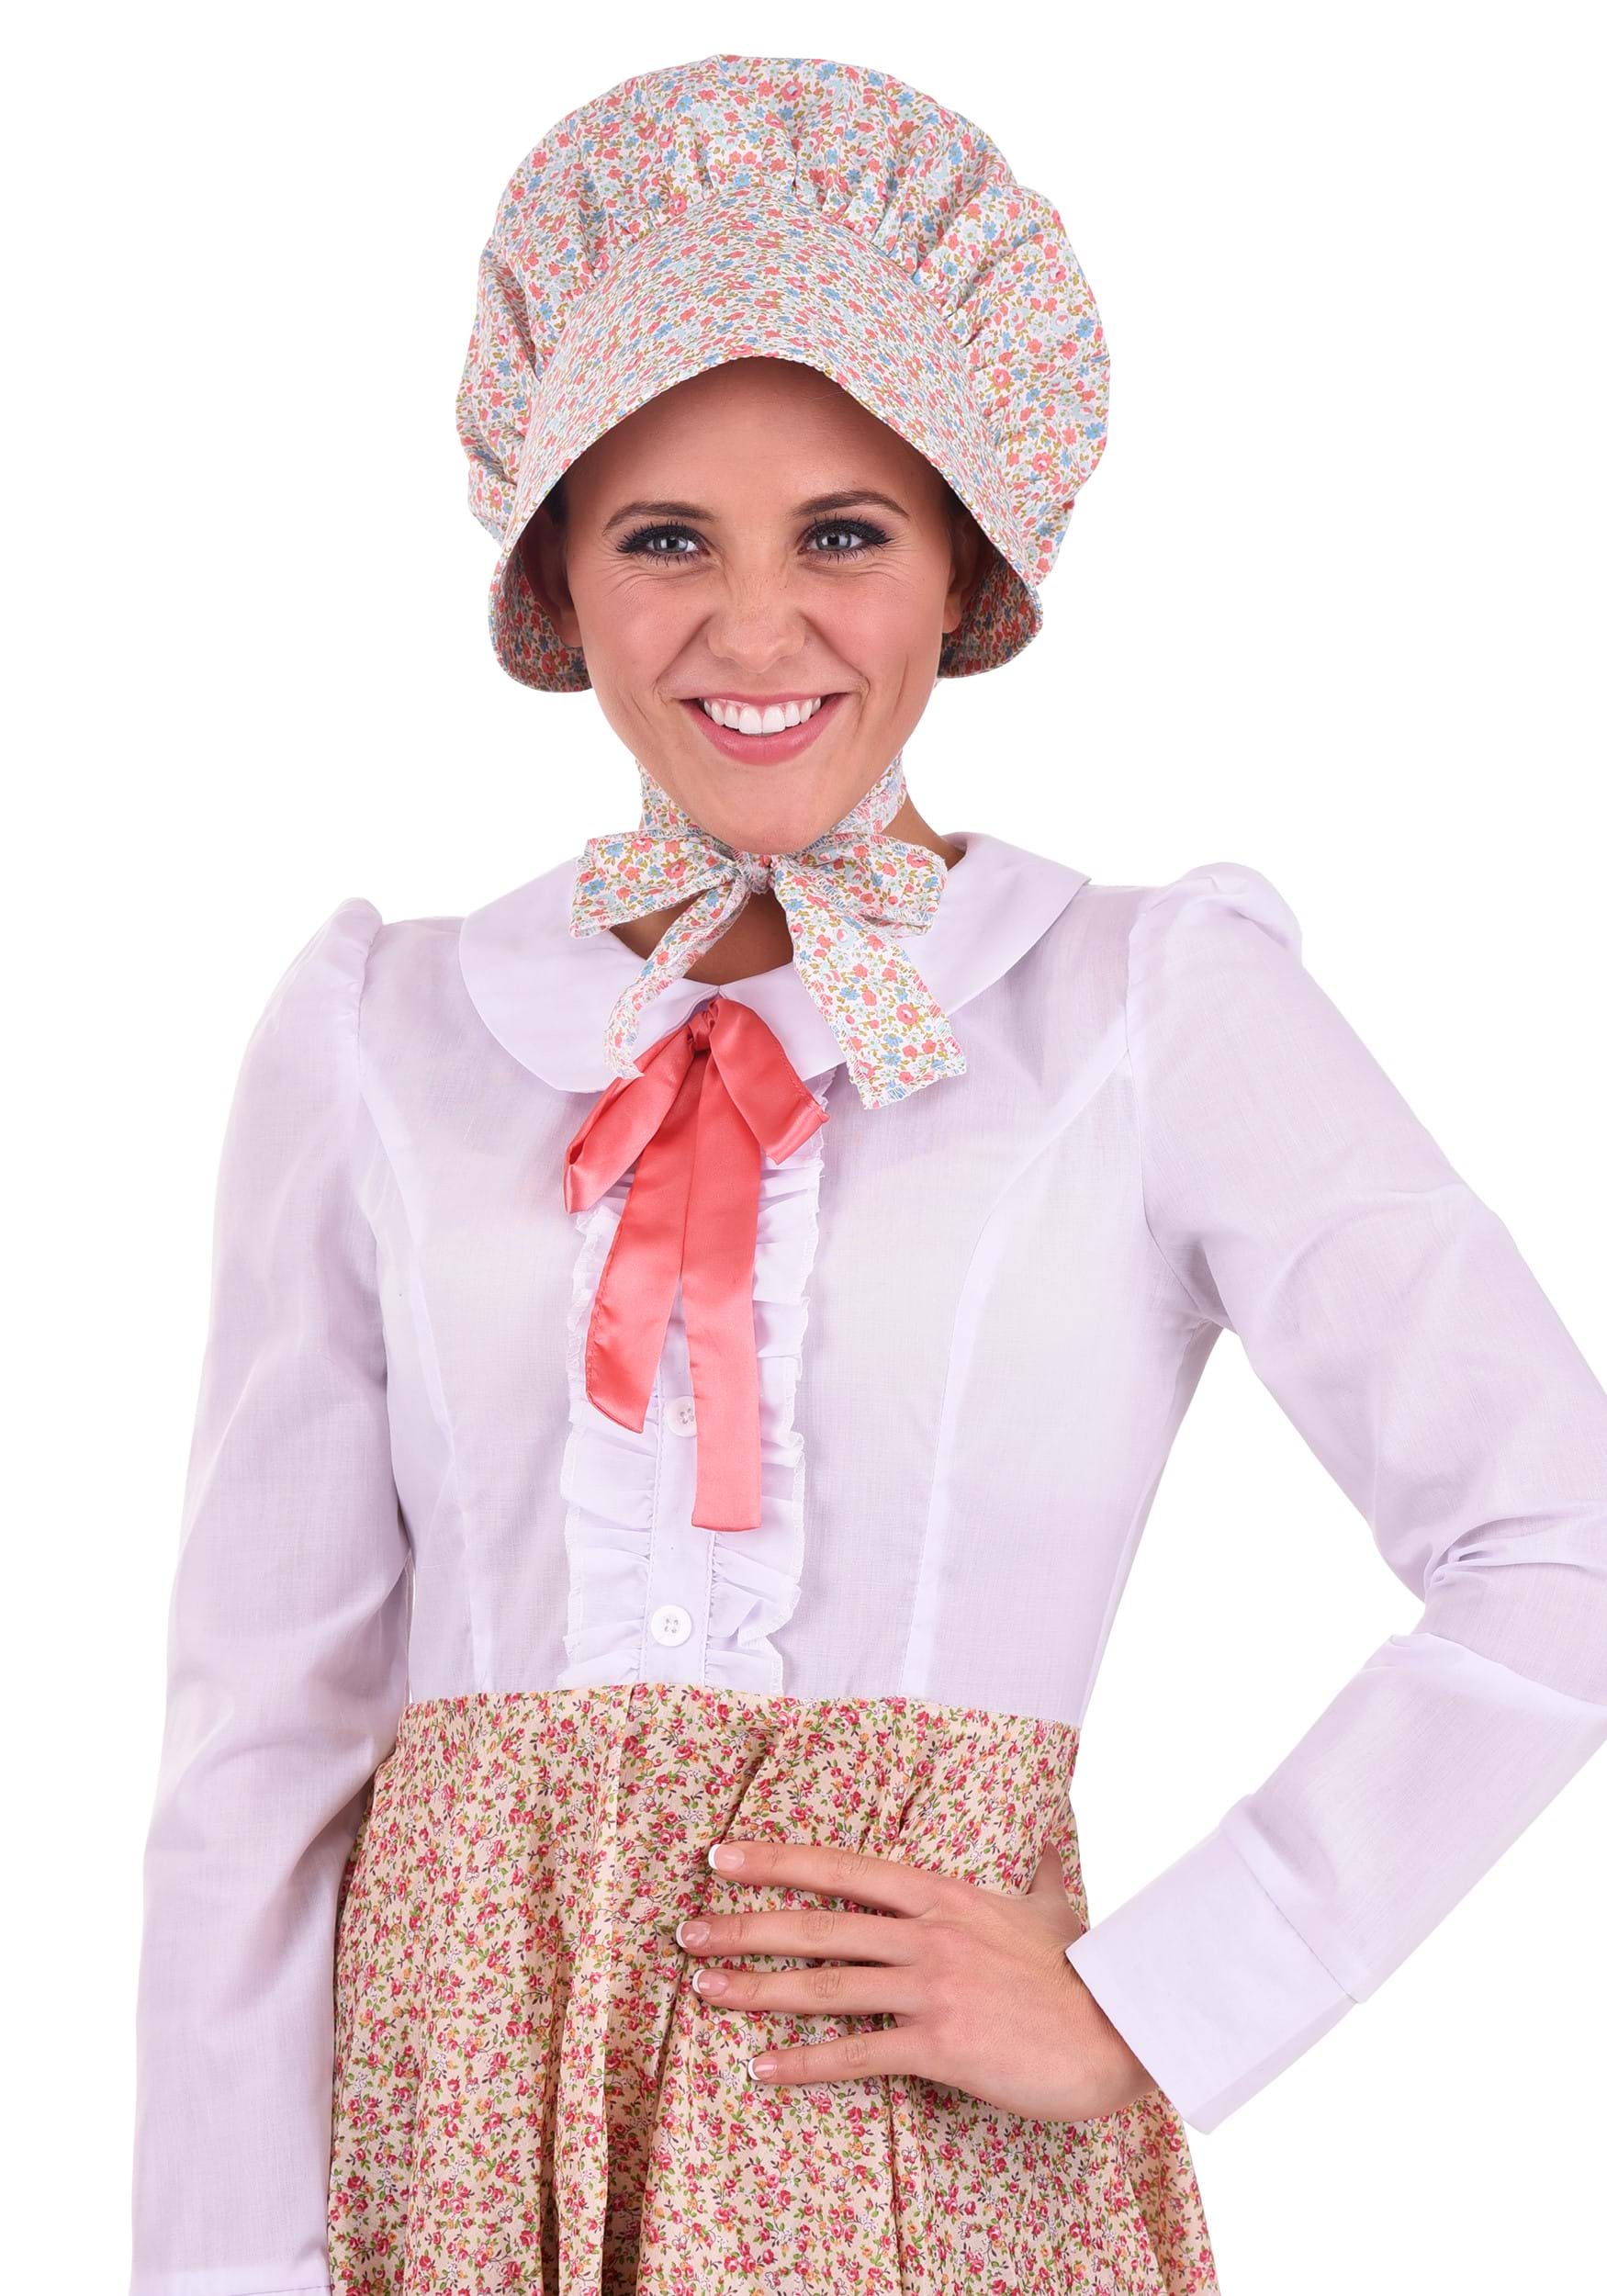 Accessories, Hot Pink Designer Bonnet